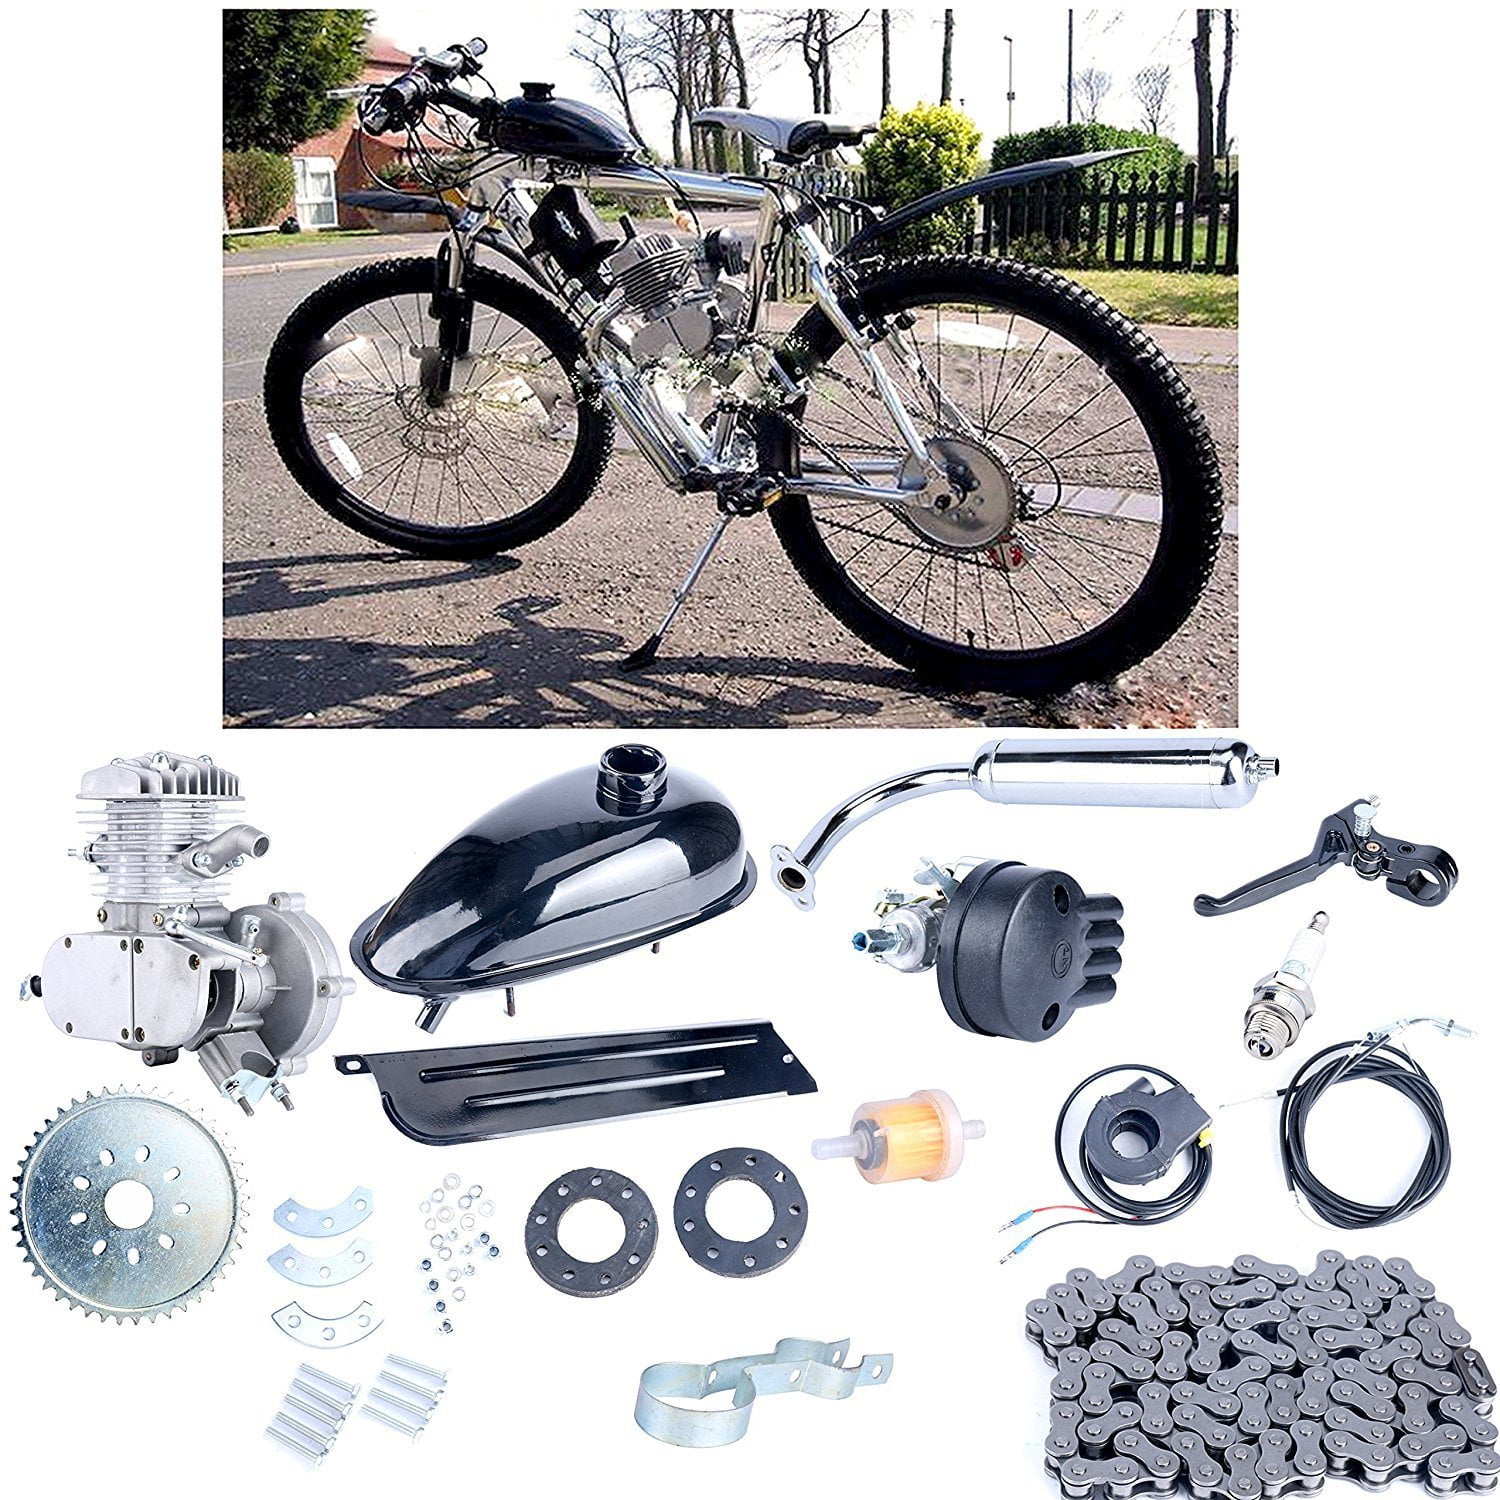 80cc bicycle motor kit Full Set Motorized 2 Stroke Petrol Gas Motor Engine Kits 